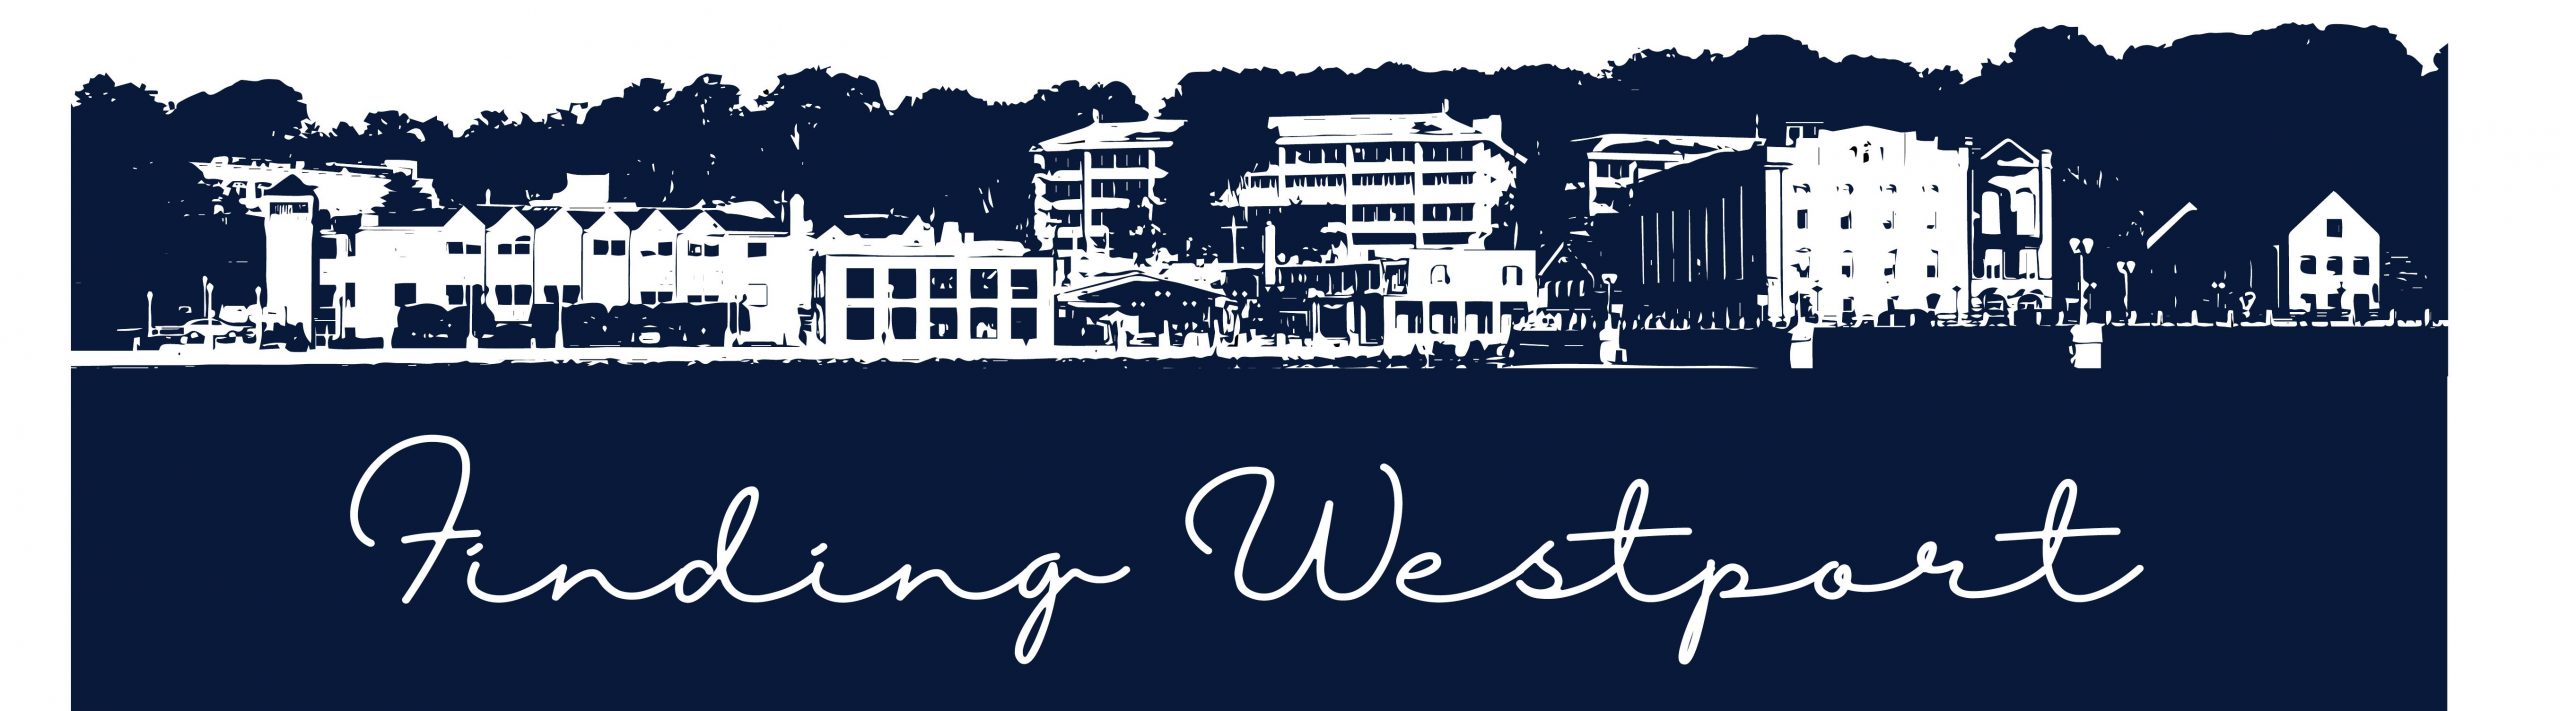 Finding westport logo